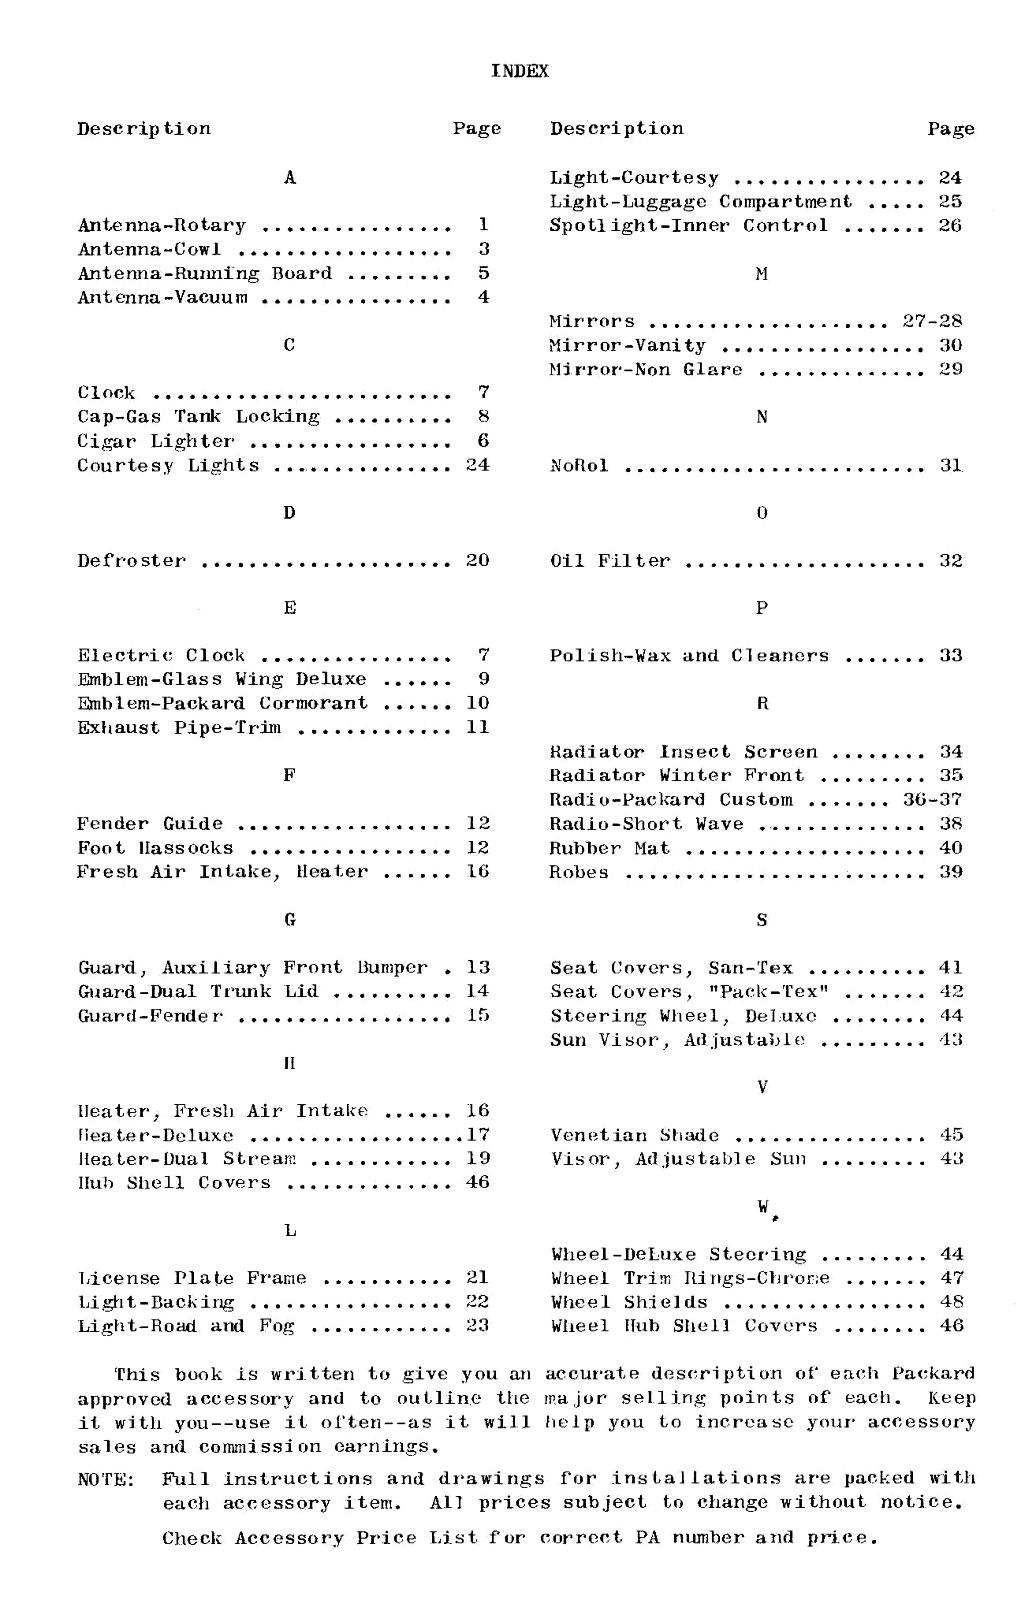 1942 Packard Accessory Data Book-00a